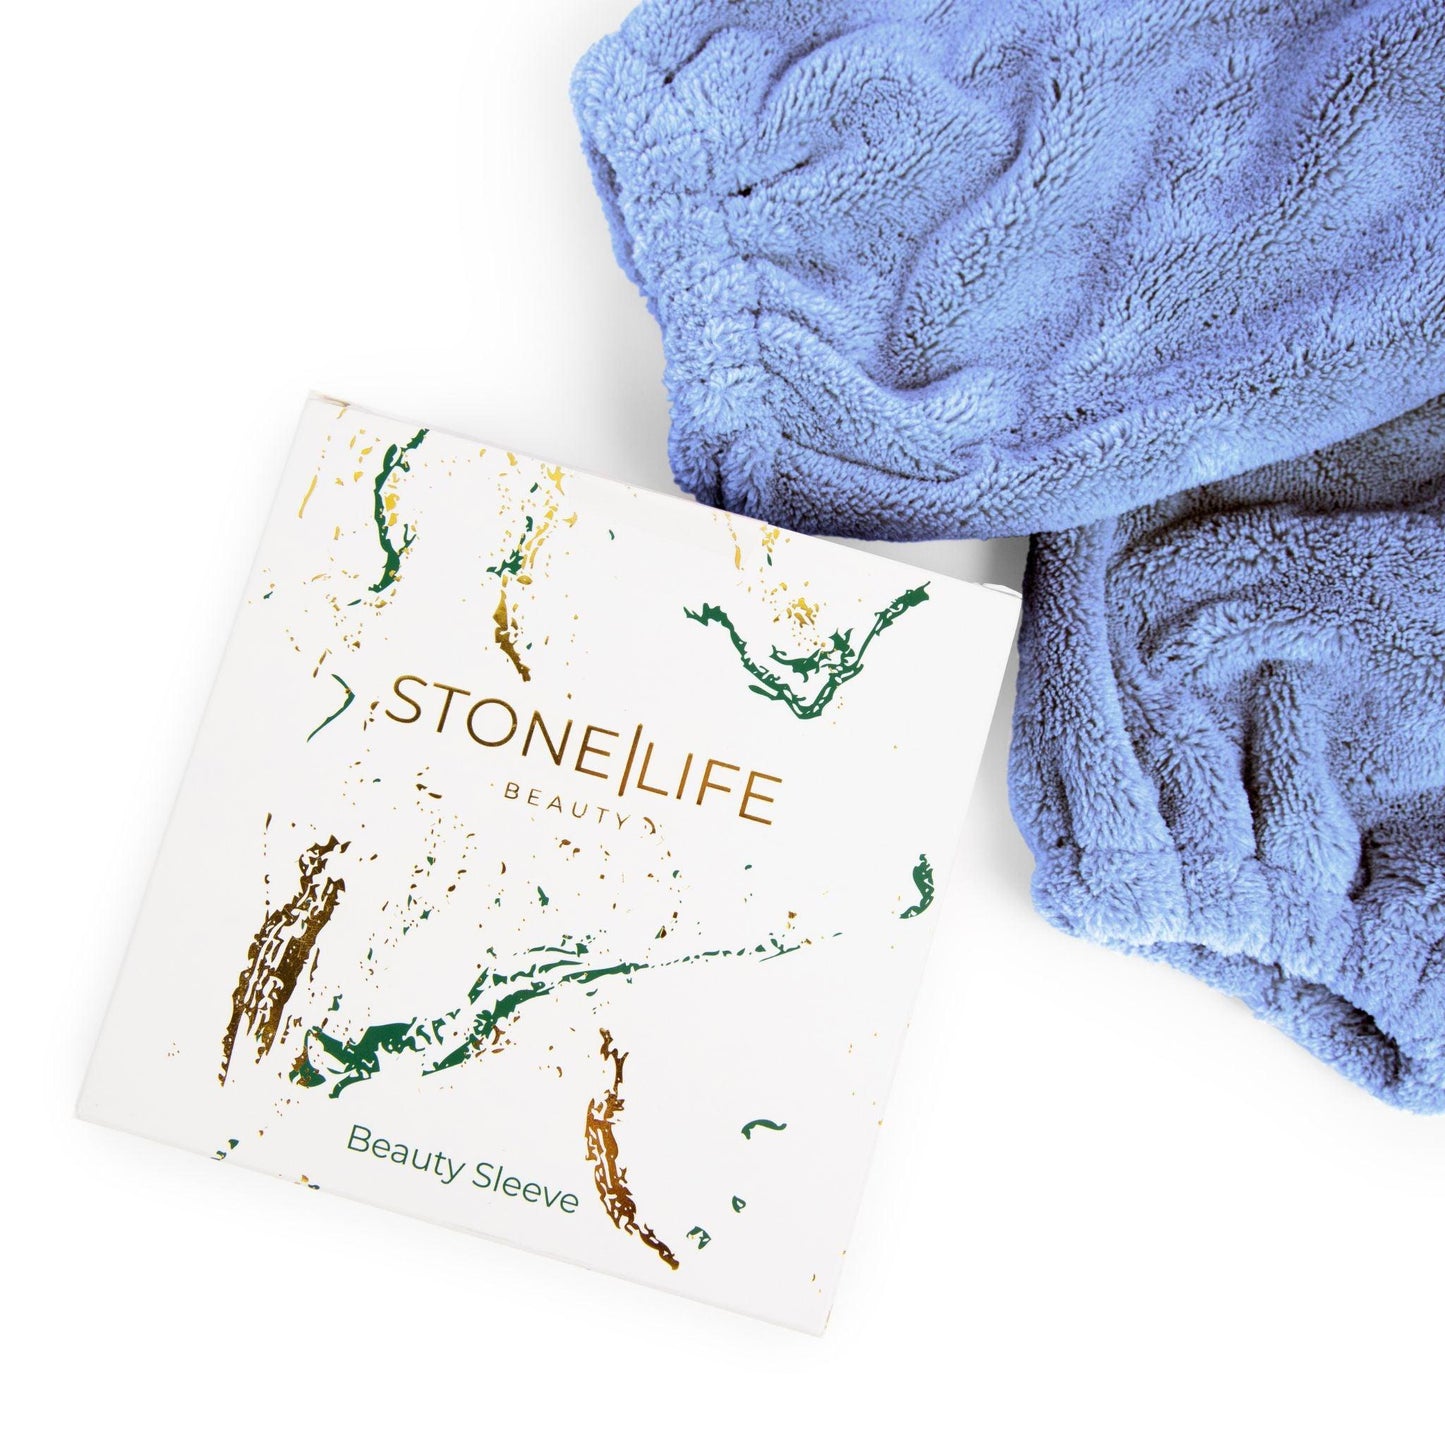 Original Bombshell Beauty Sleeve - Sky Blue - Stone|Life Beauty